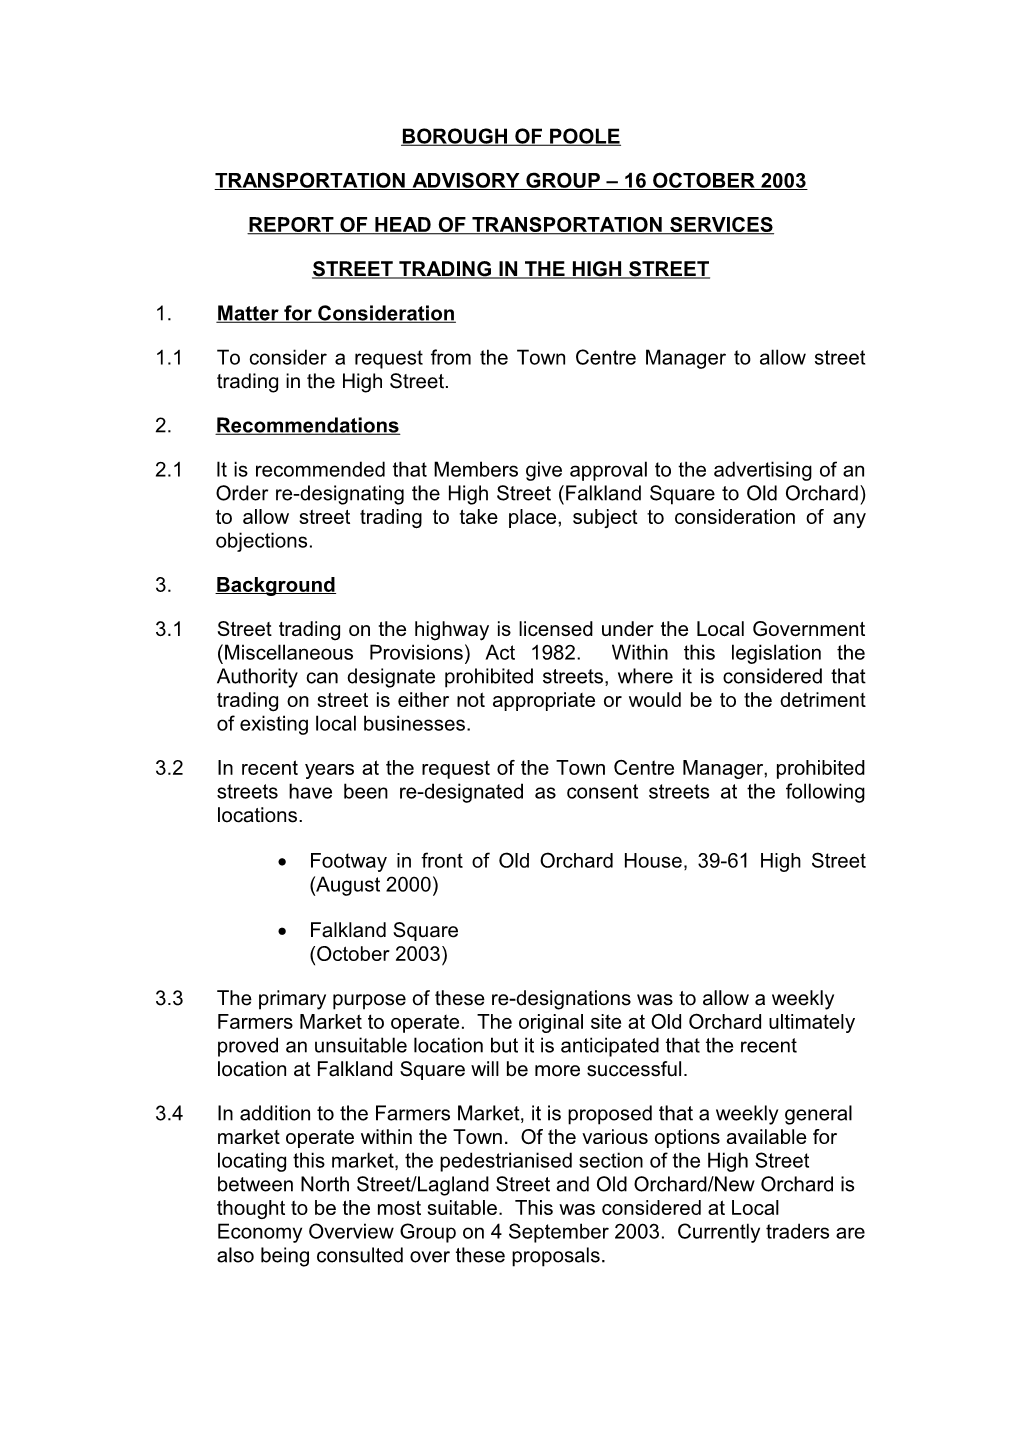 PFD - Councillor Parker - 4 September 2003 - Street Trading in High Street - Report